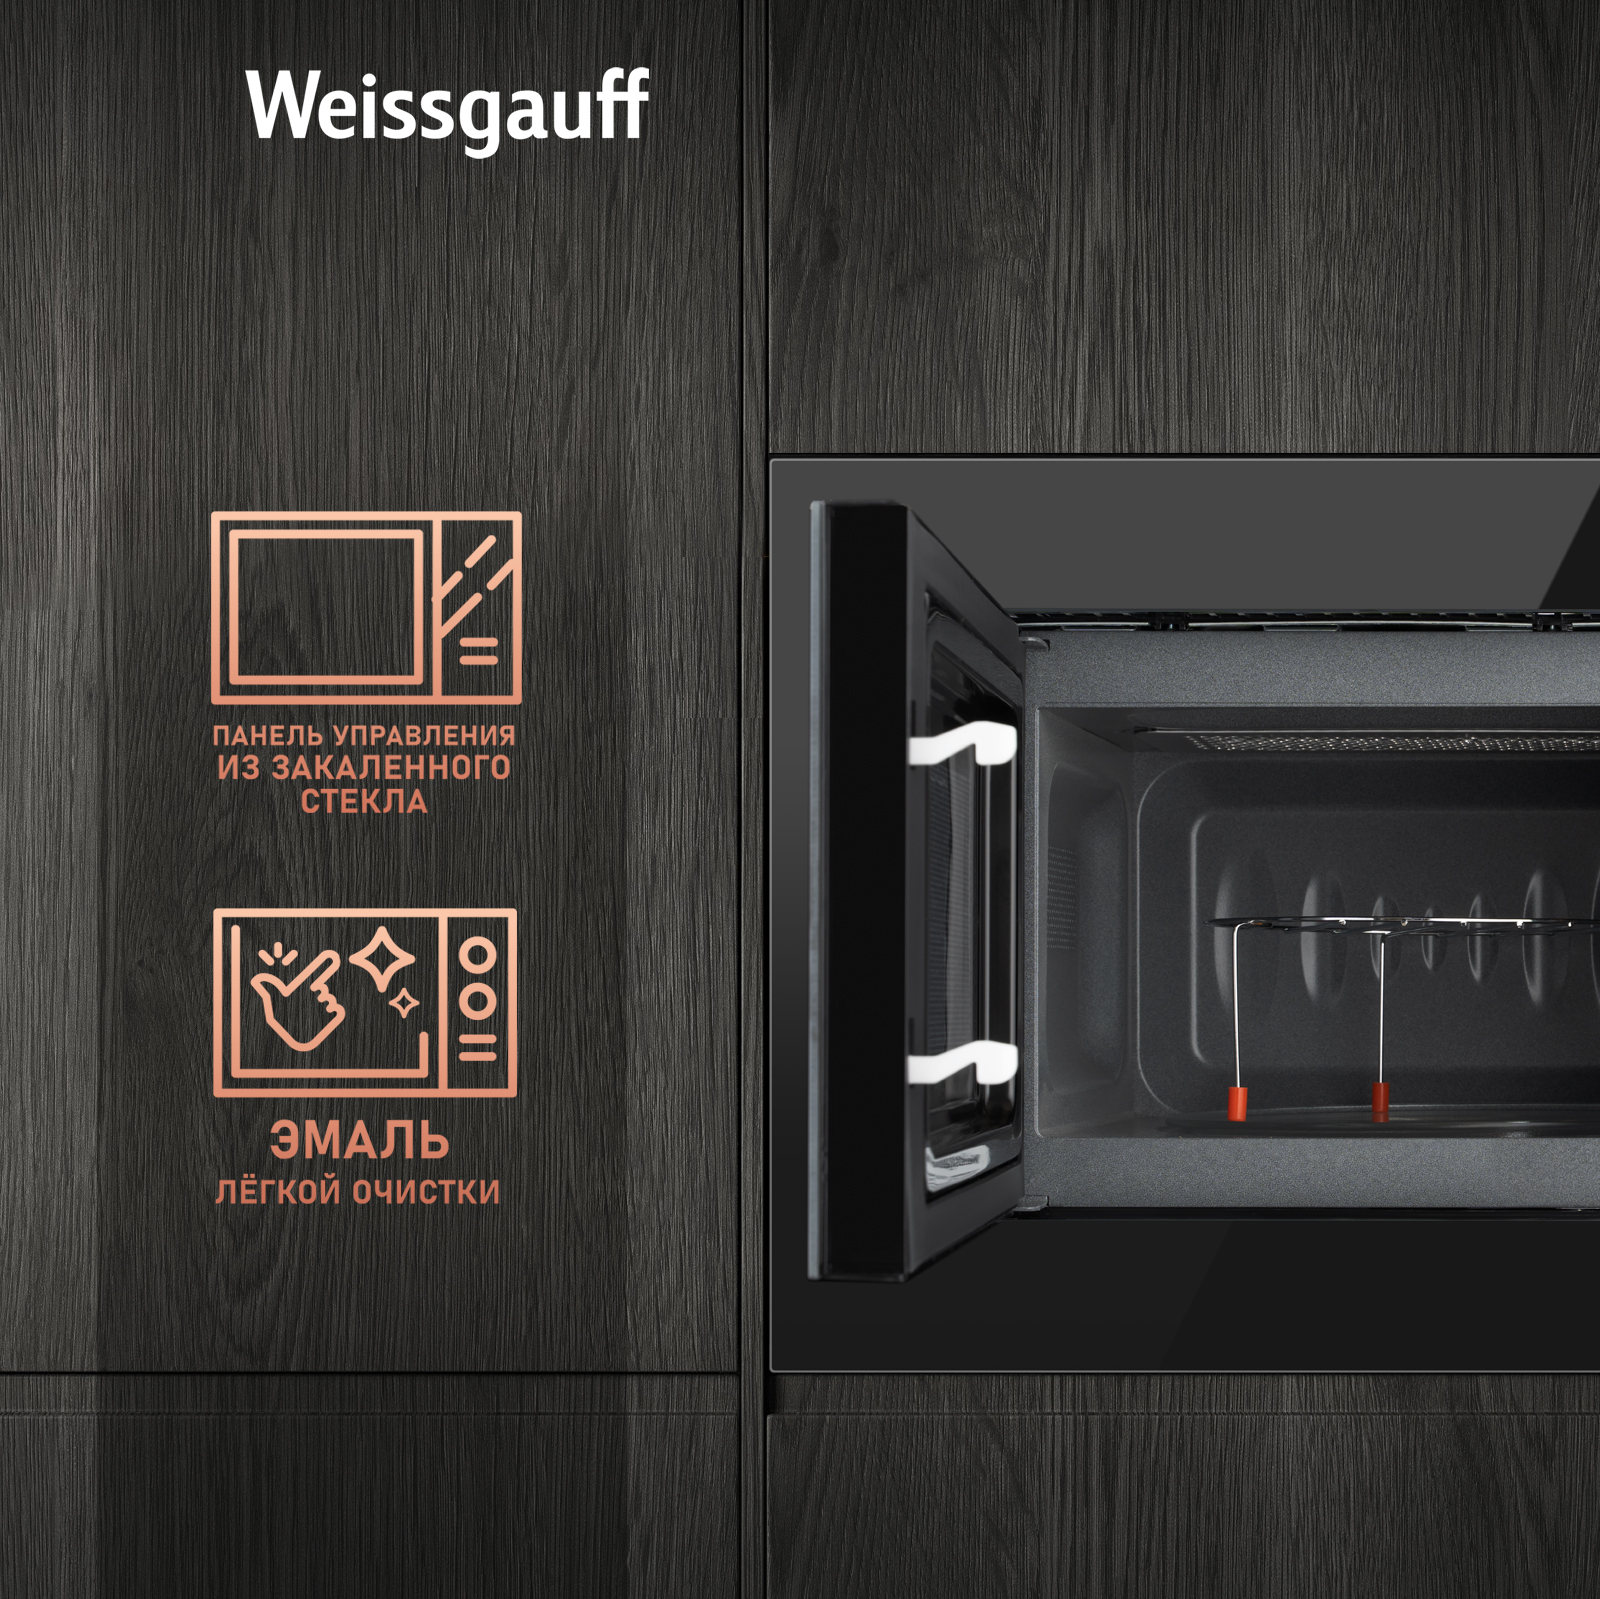 Hmt 620 grill. Weissgauff HMT-620 bg Grill. Встраиваемая микроволновая печь Weissgauff HMT-2016 Grill черная. Микроволновая печь встраиваемая Simfer md2320.